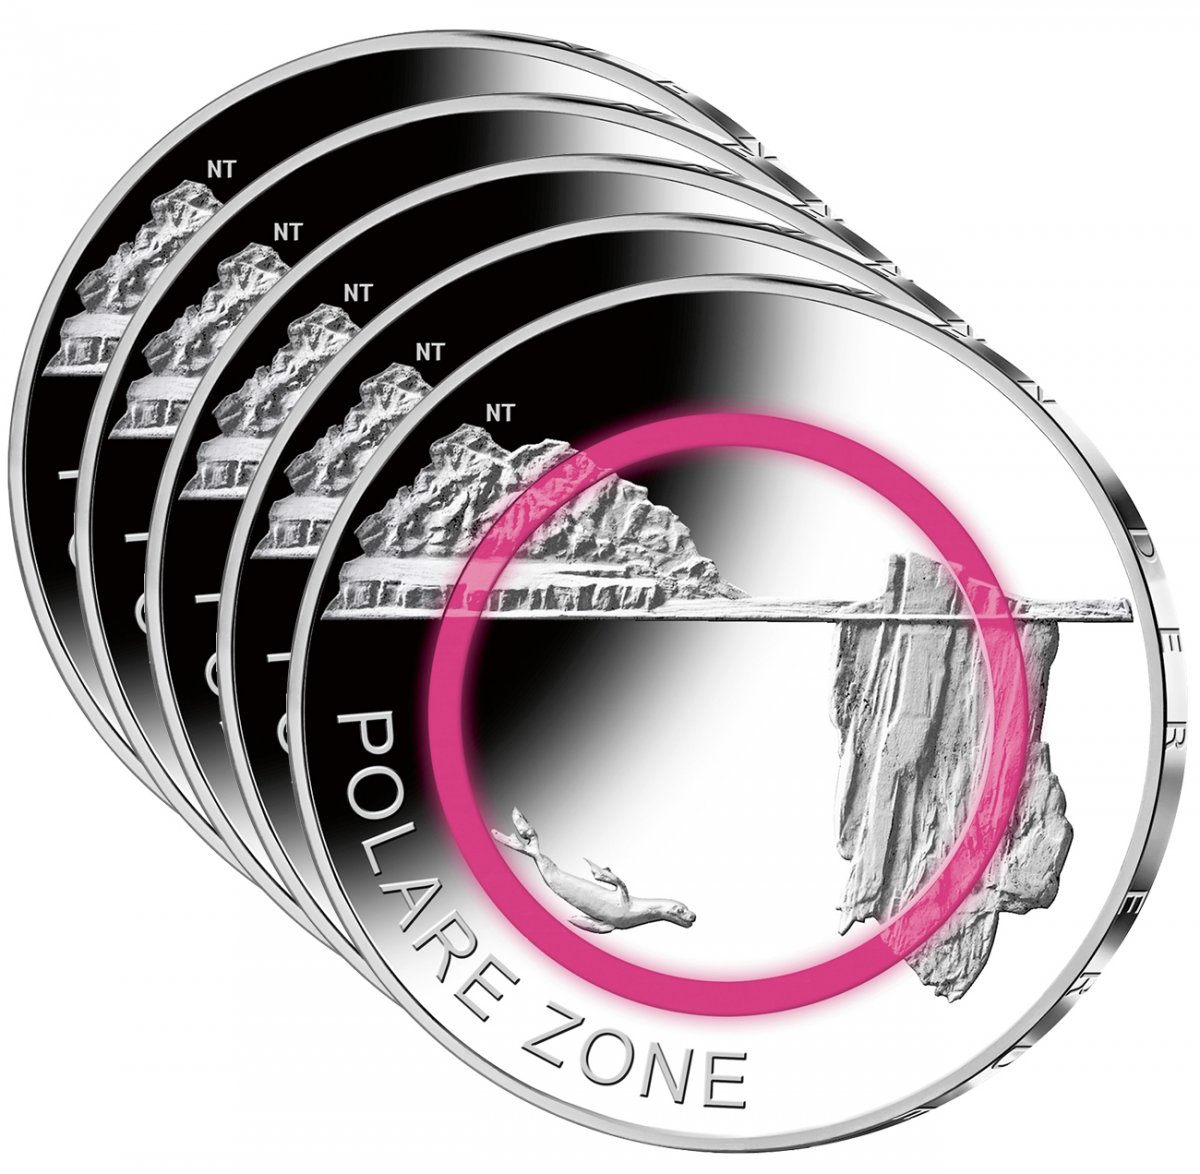 5-Euro-Polymerring-Sammlermünzen-Set 2021 "Polare Zone"                                              